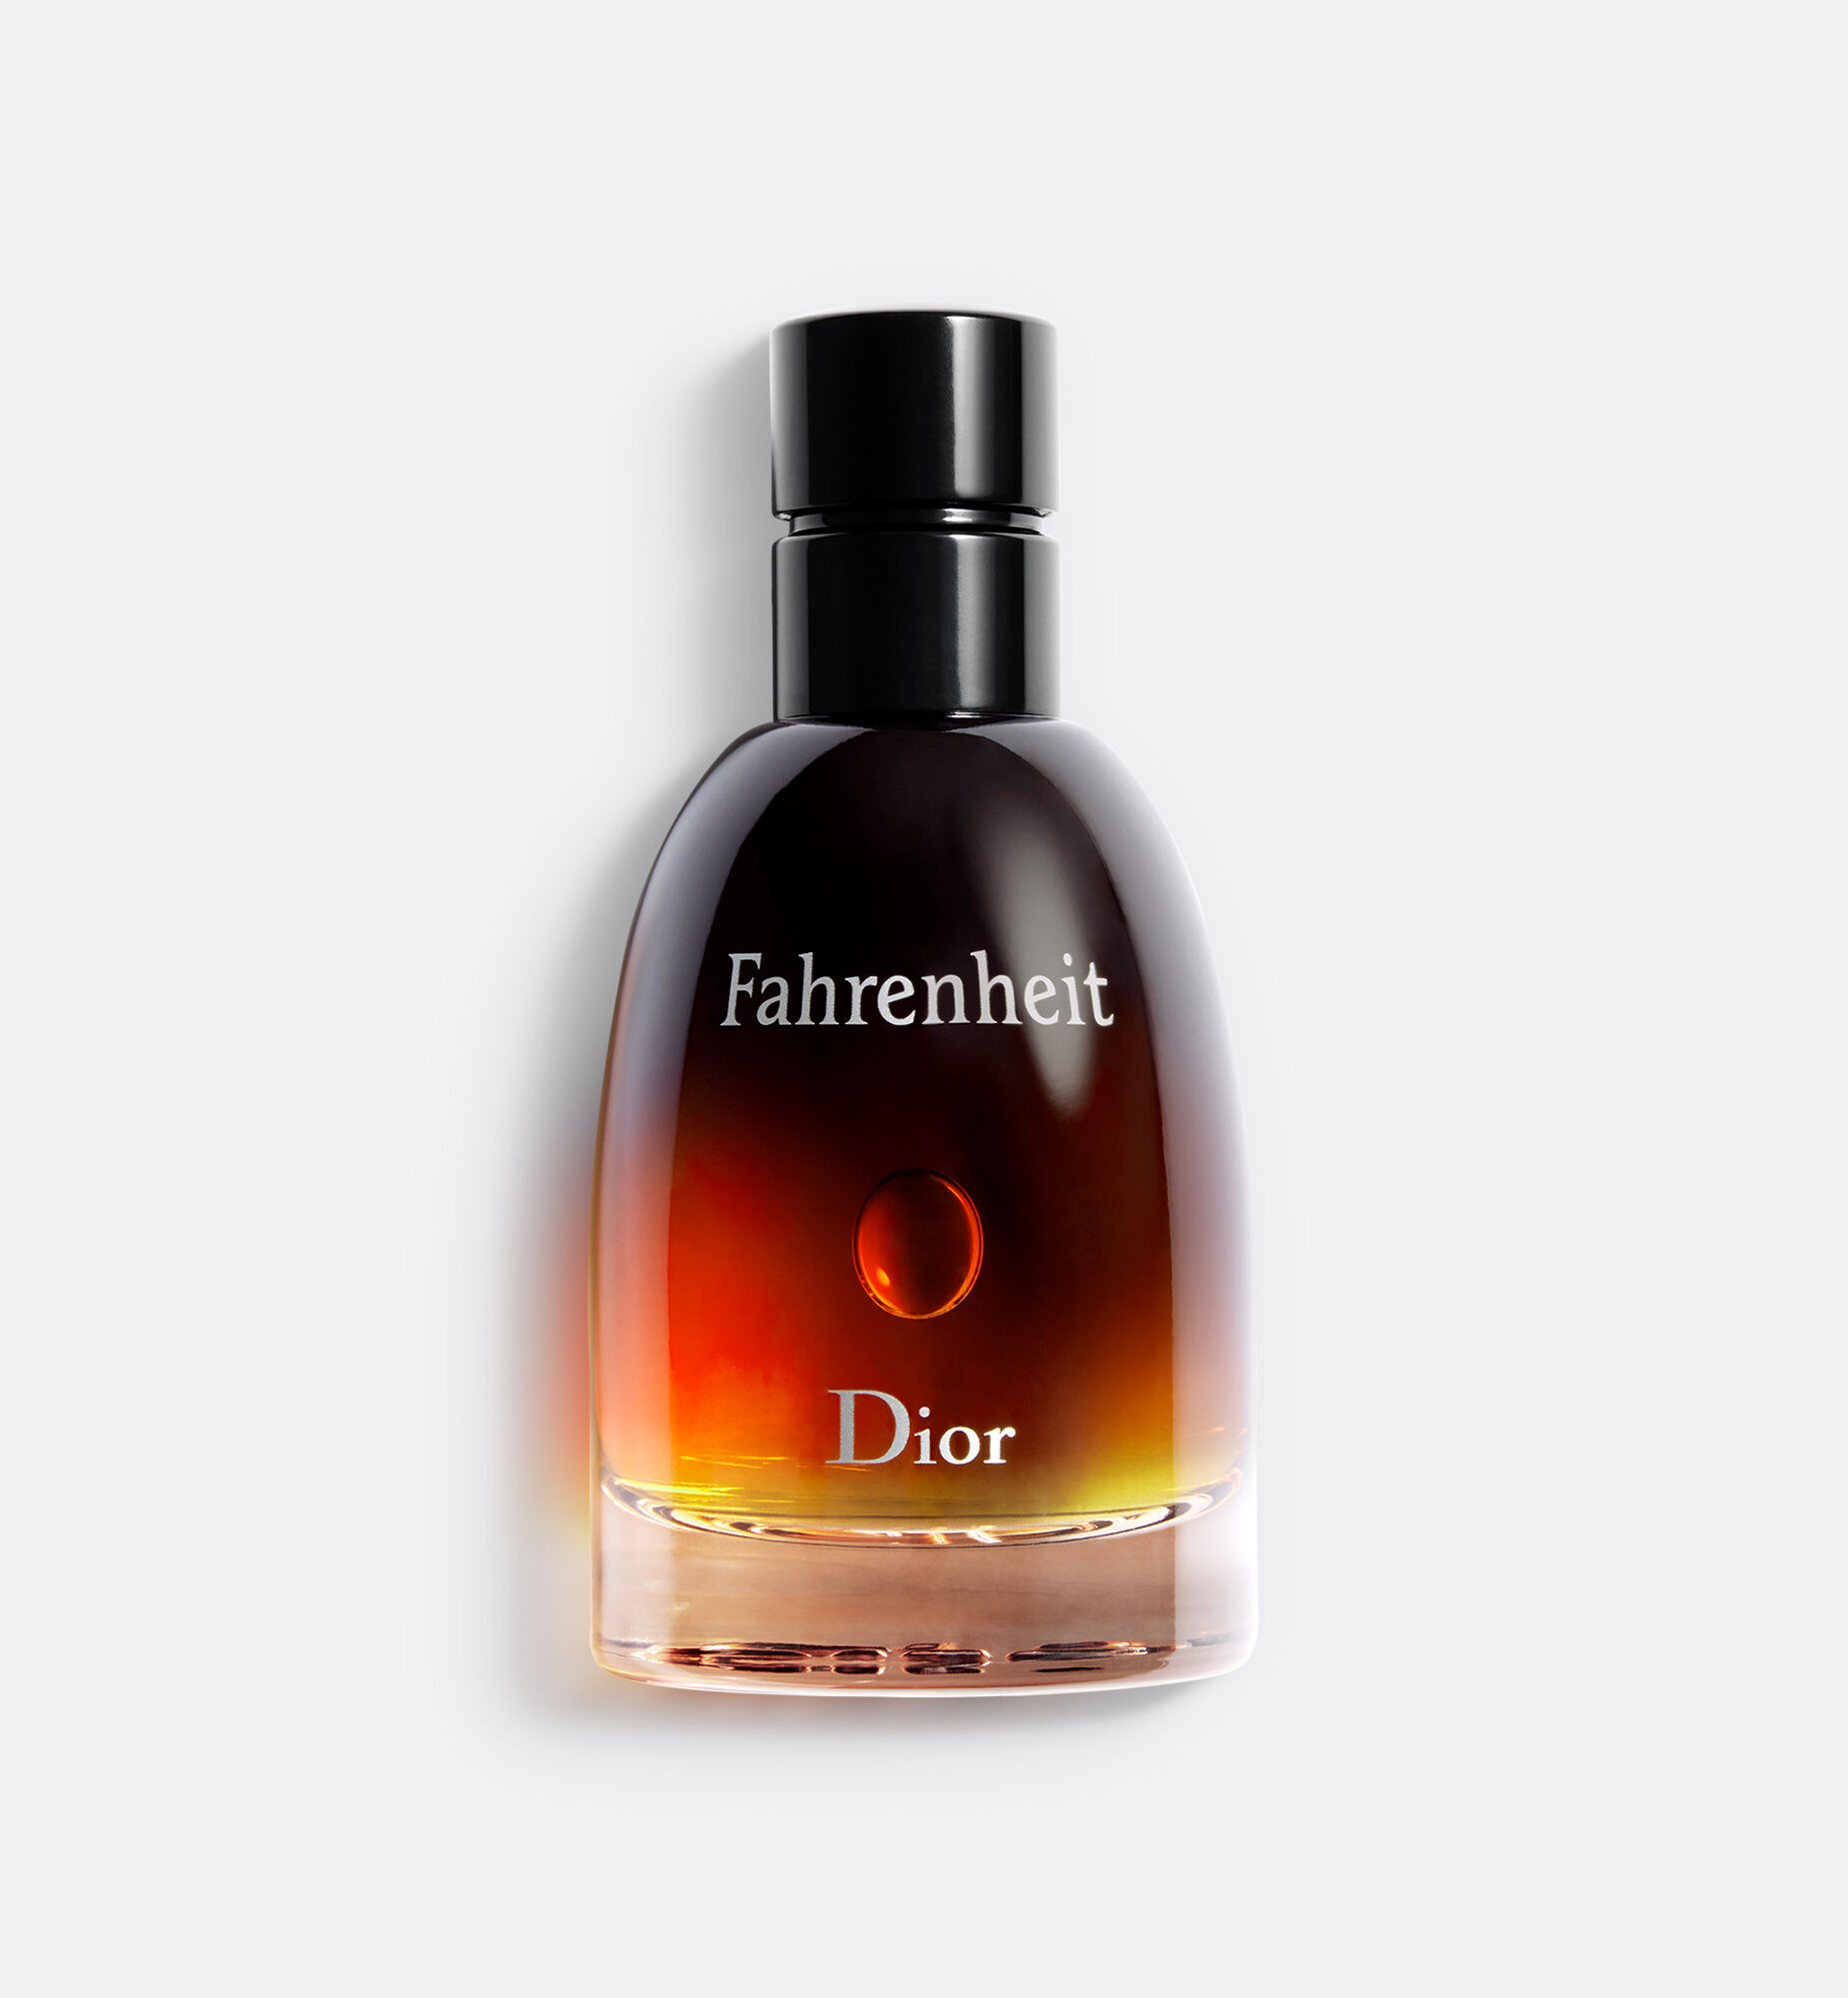 Amazoncom  Christian Dior Fahrenheit Parfum Spray for Men 25 Ounce   Beauty  Personal Care